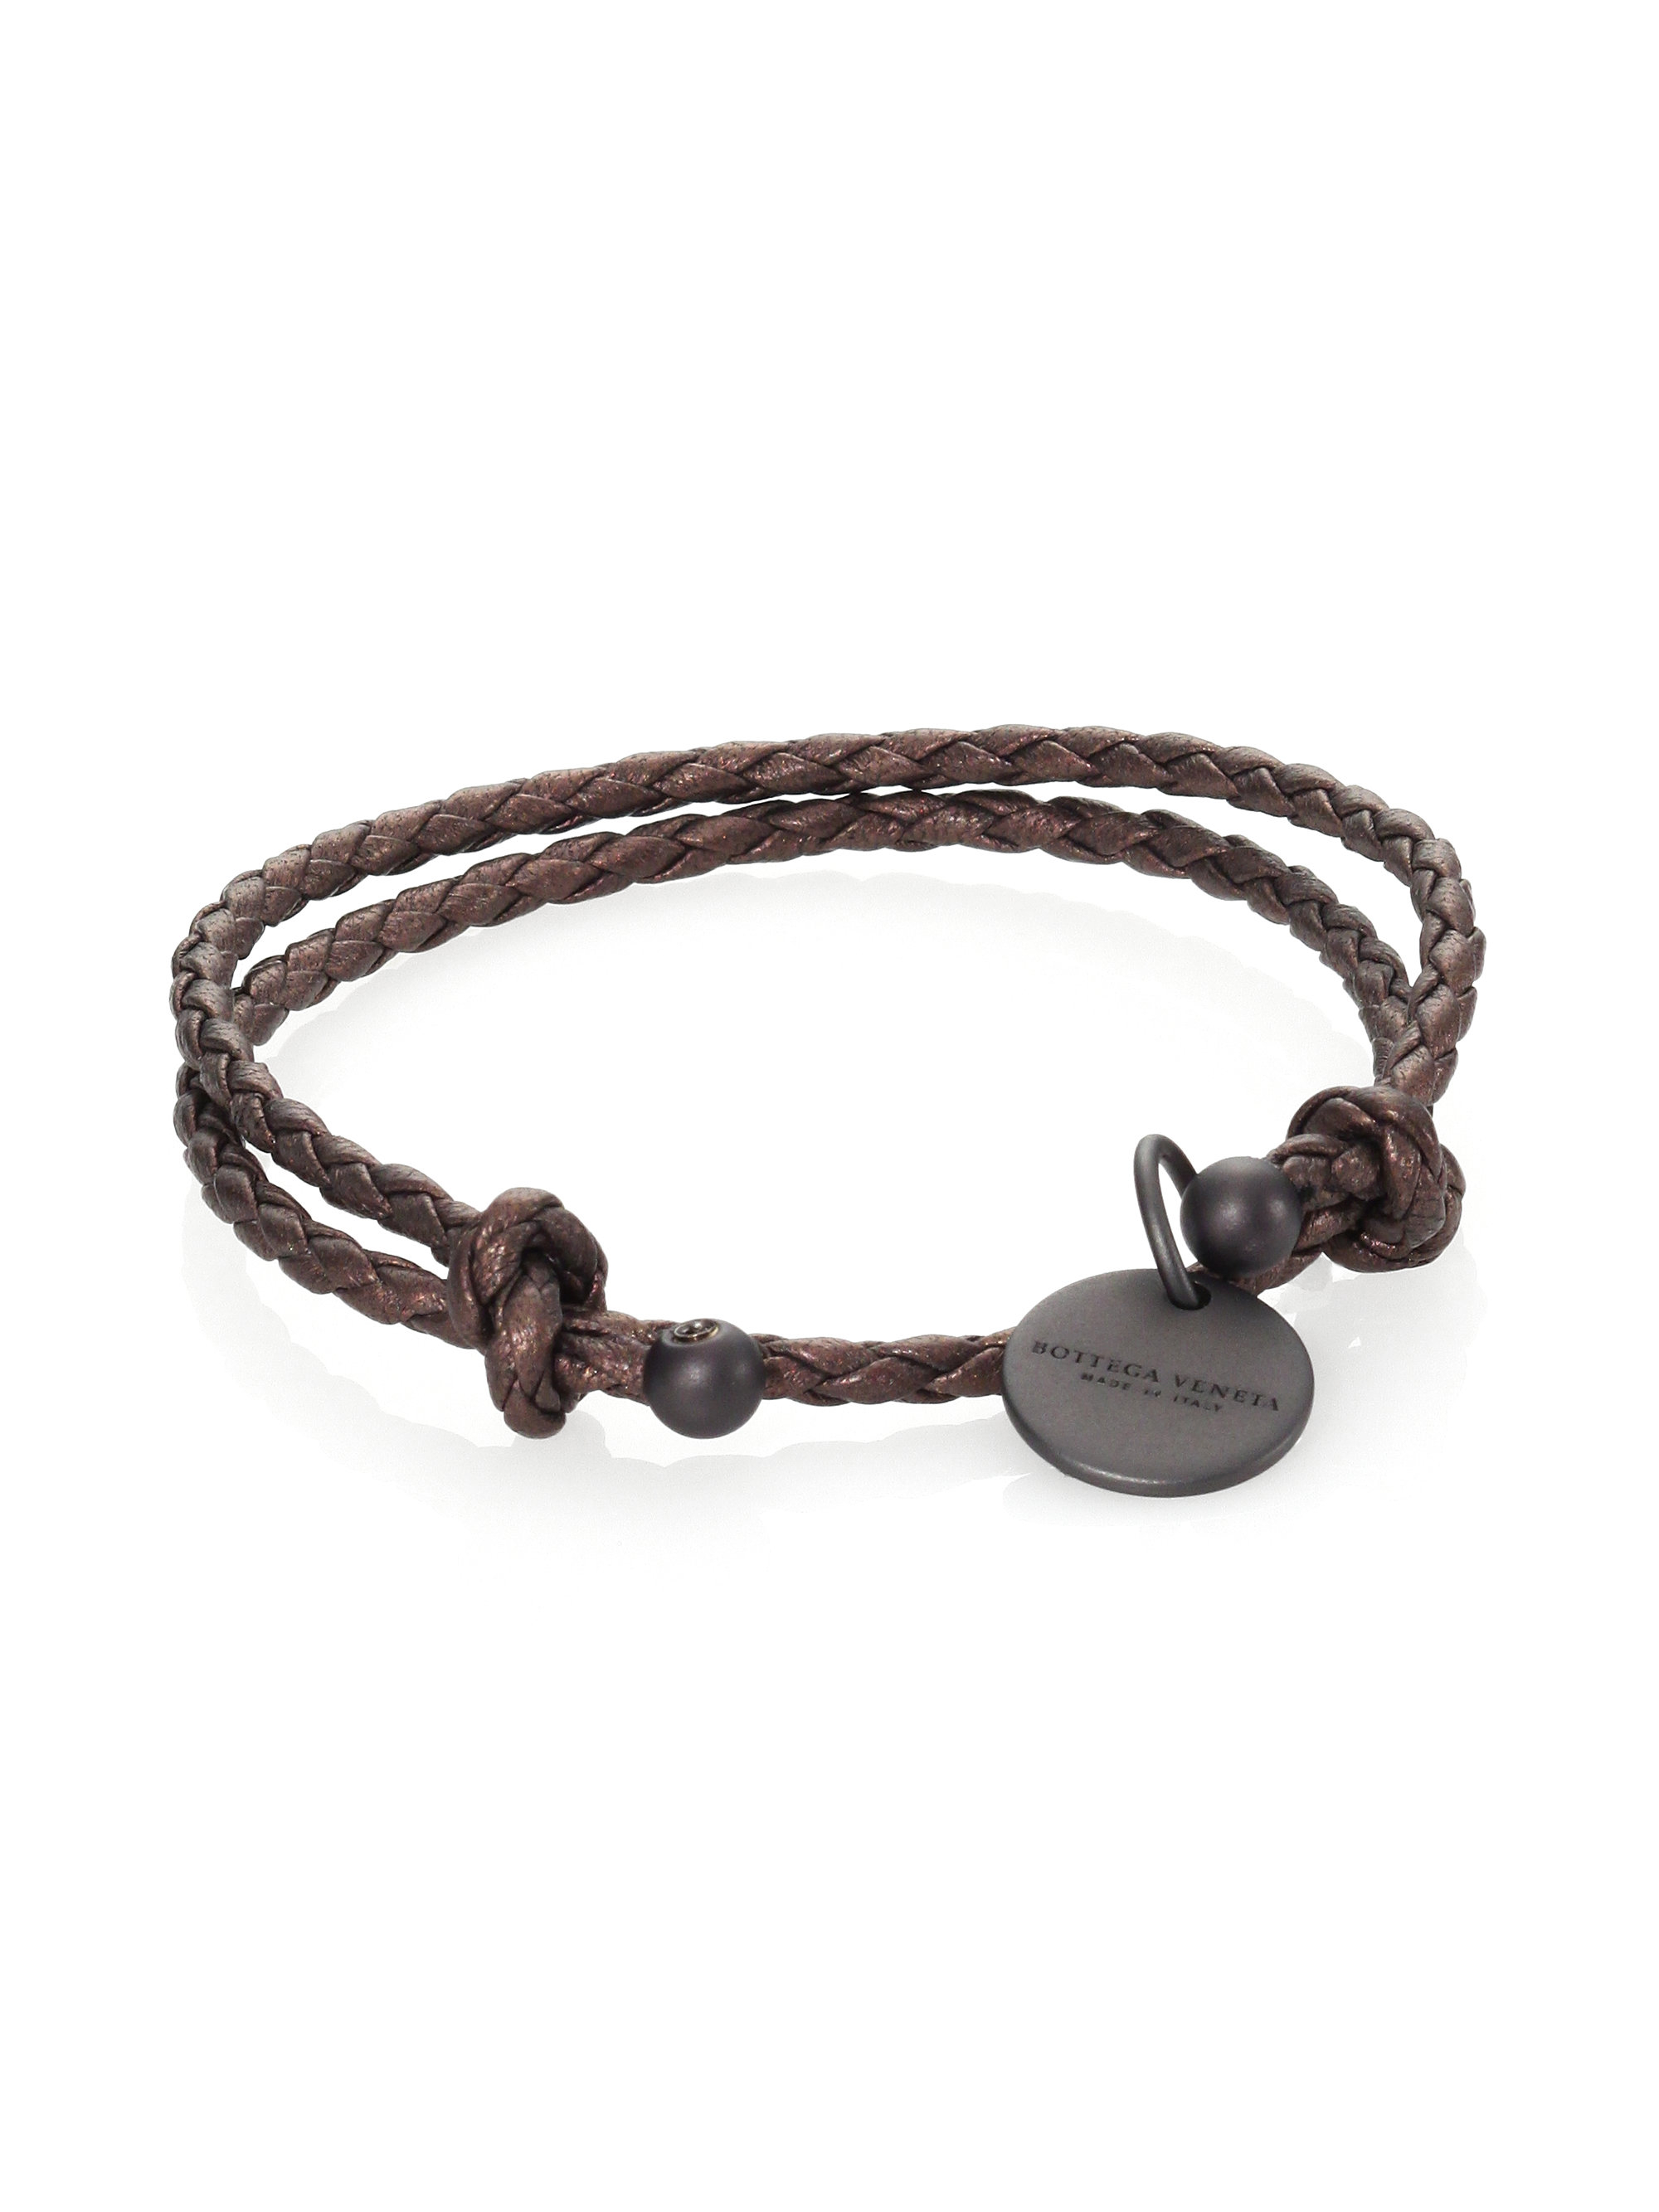 Bottega Veneta Braided Leather Charm Bracelet in Brown (BRONZE) | Lyst